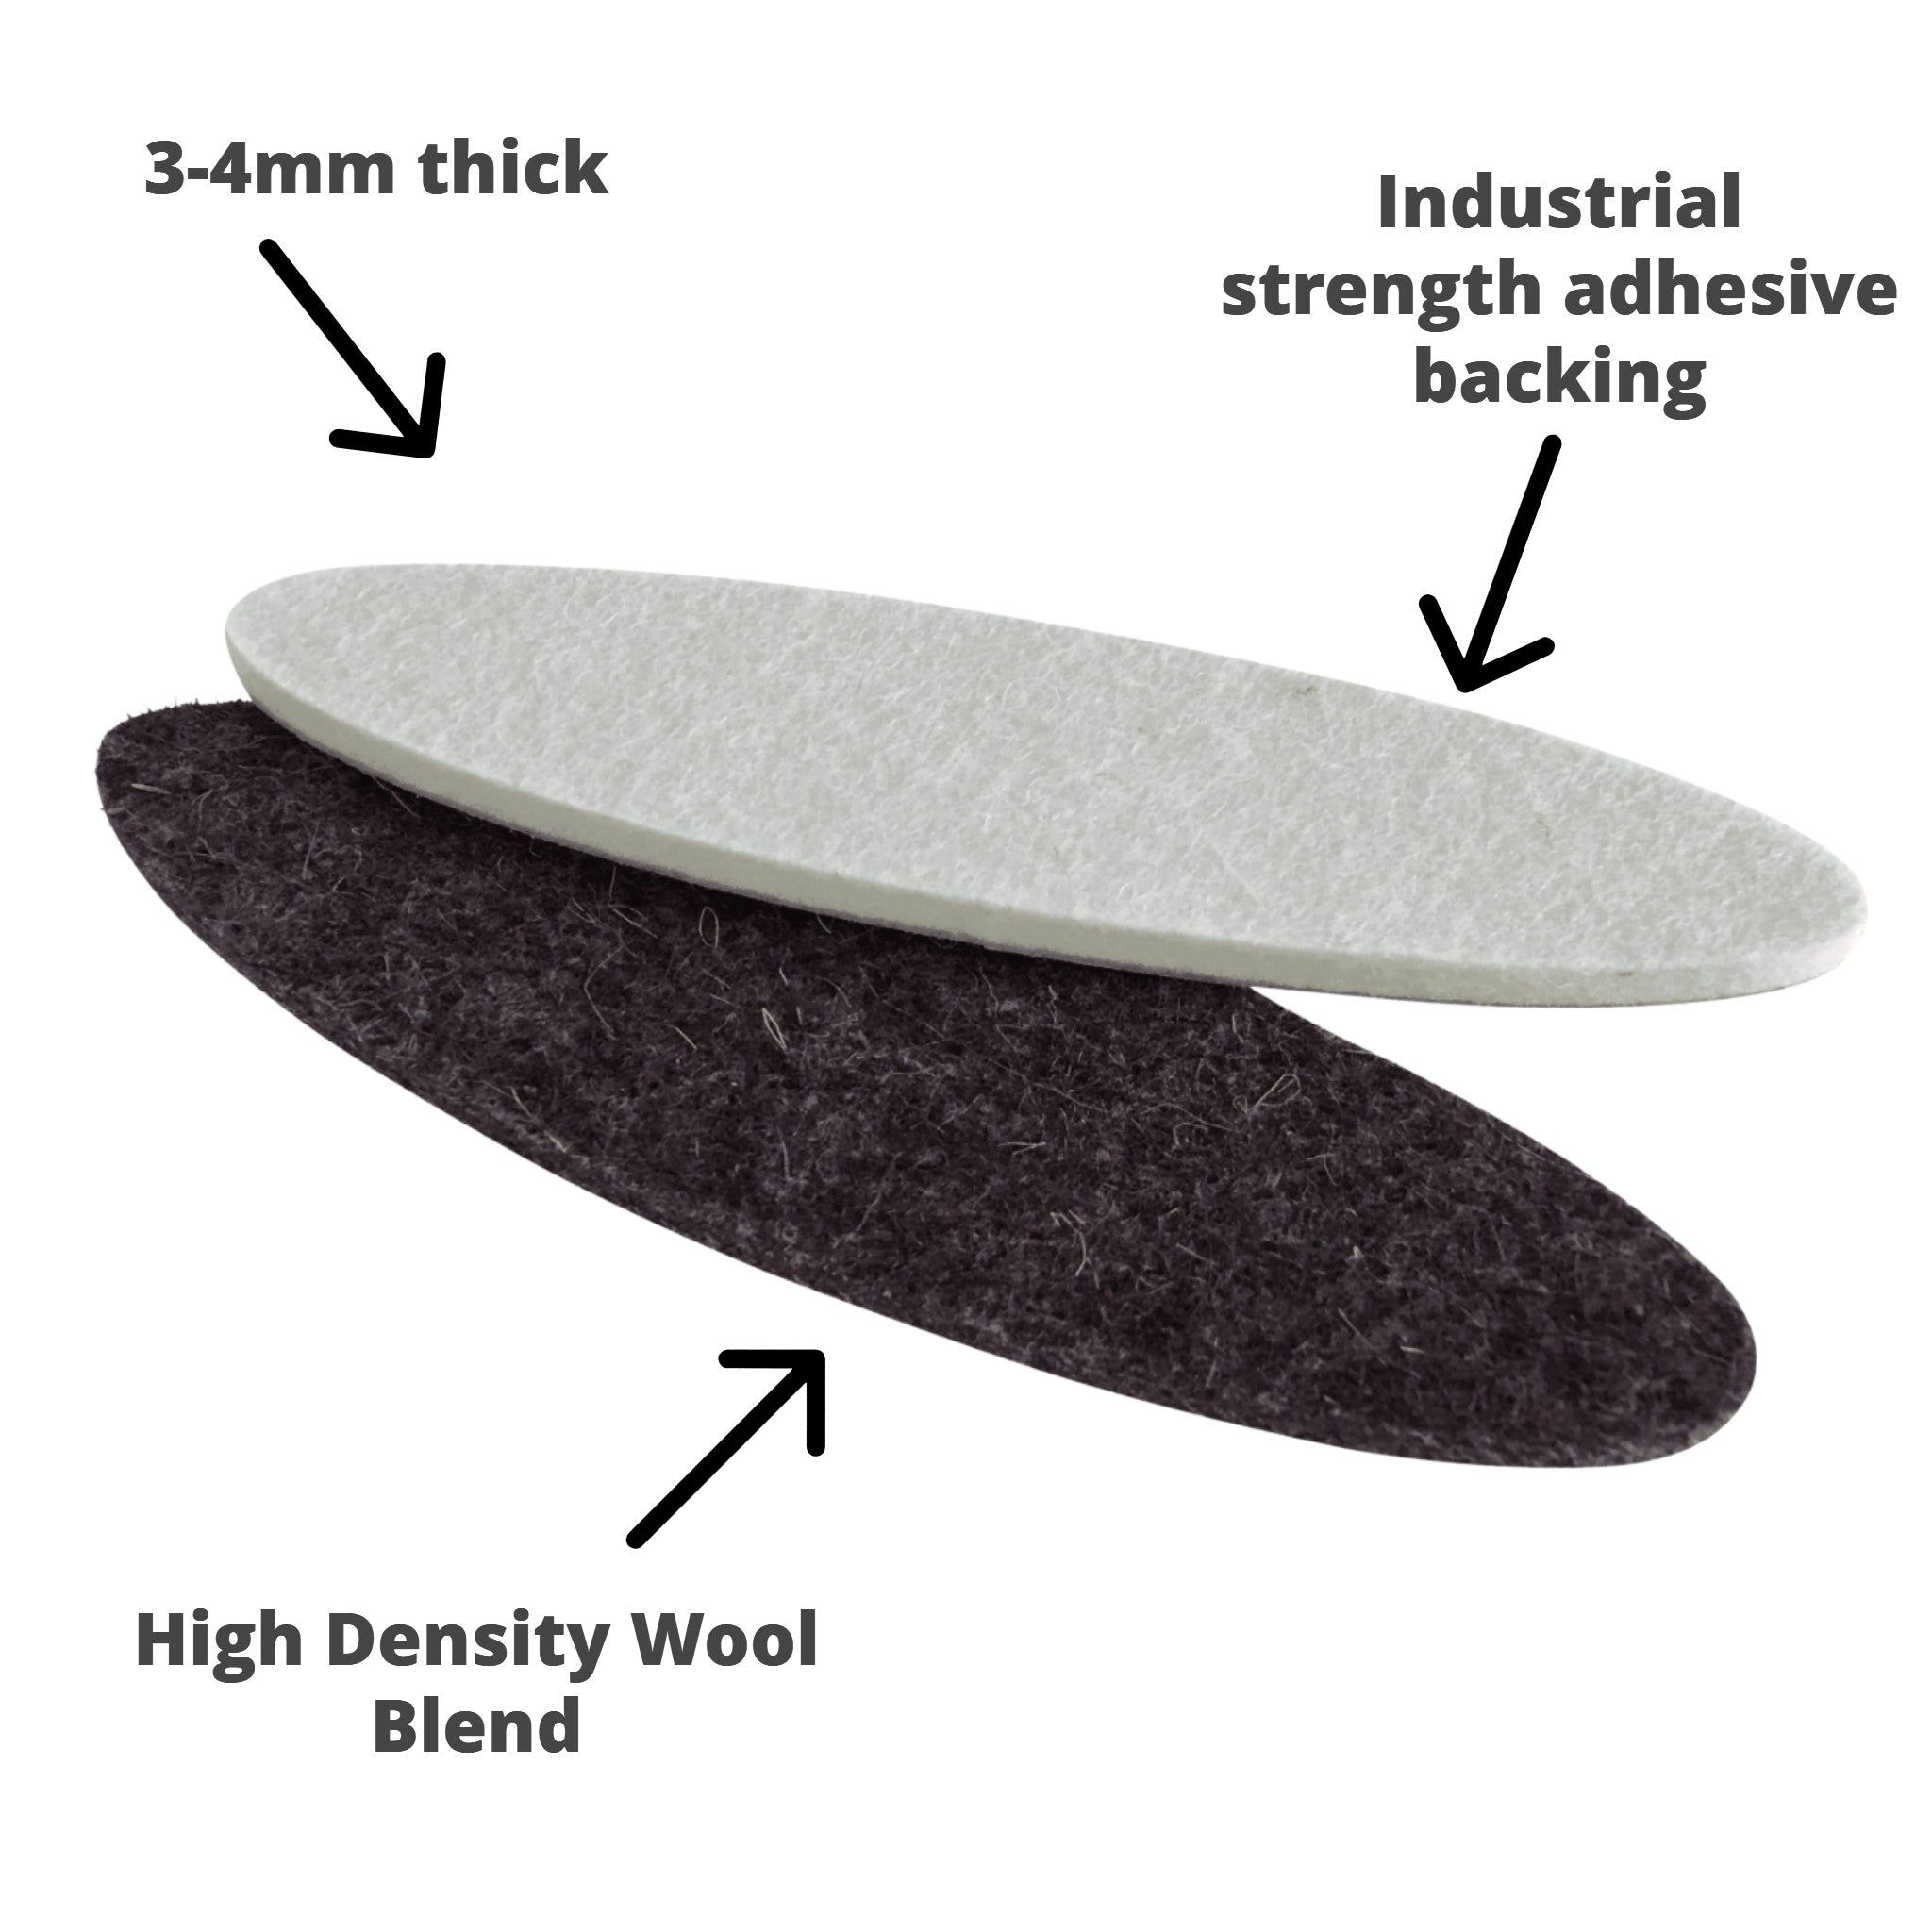 Industrial Strengh Flexi-Felt Adhesive Pads floor protectors